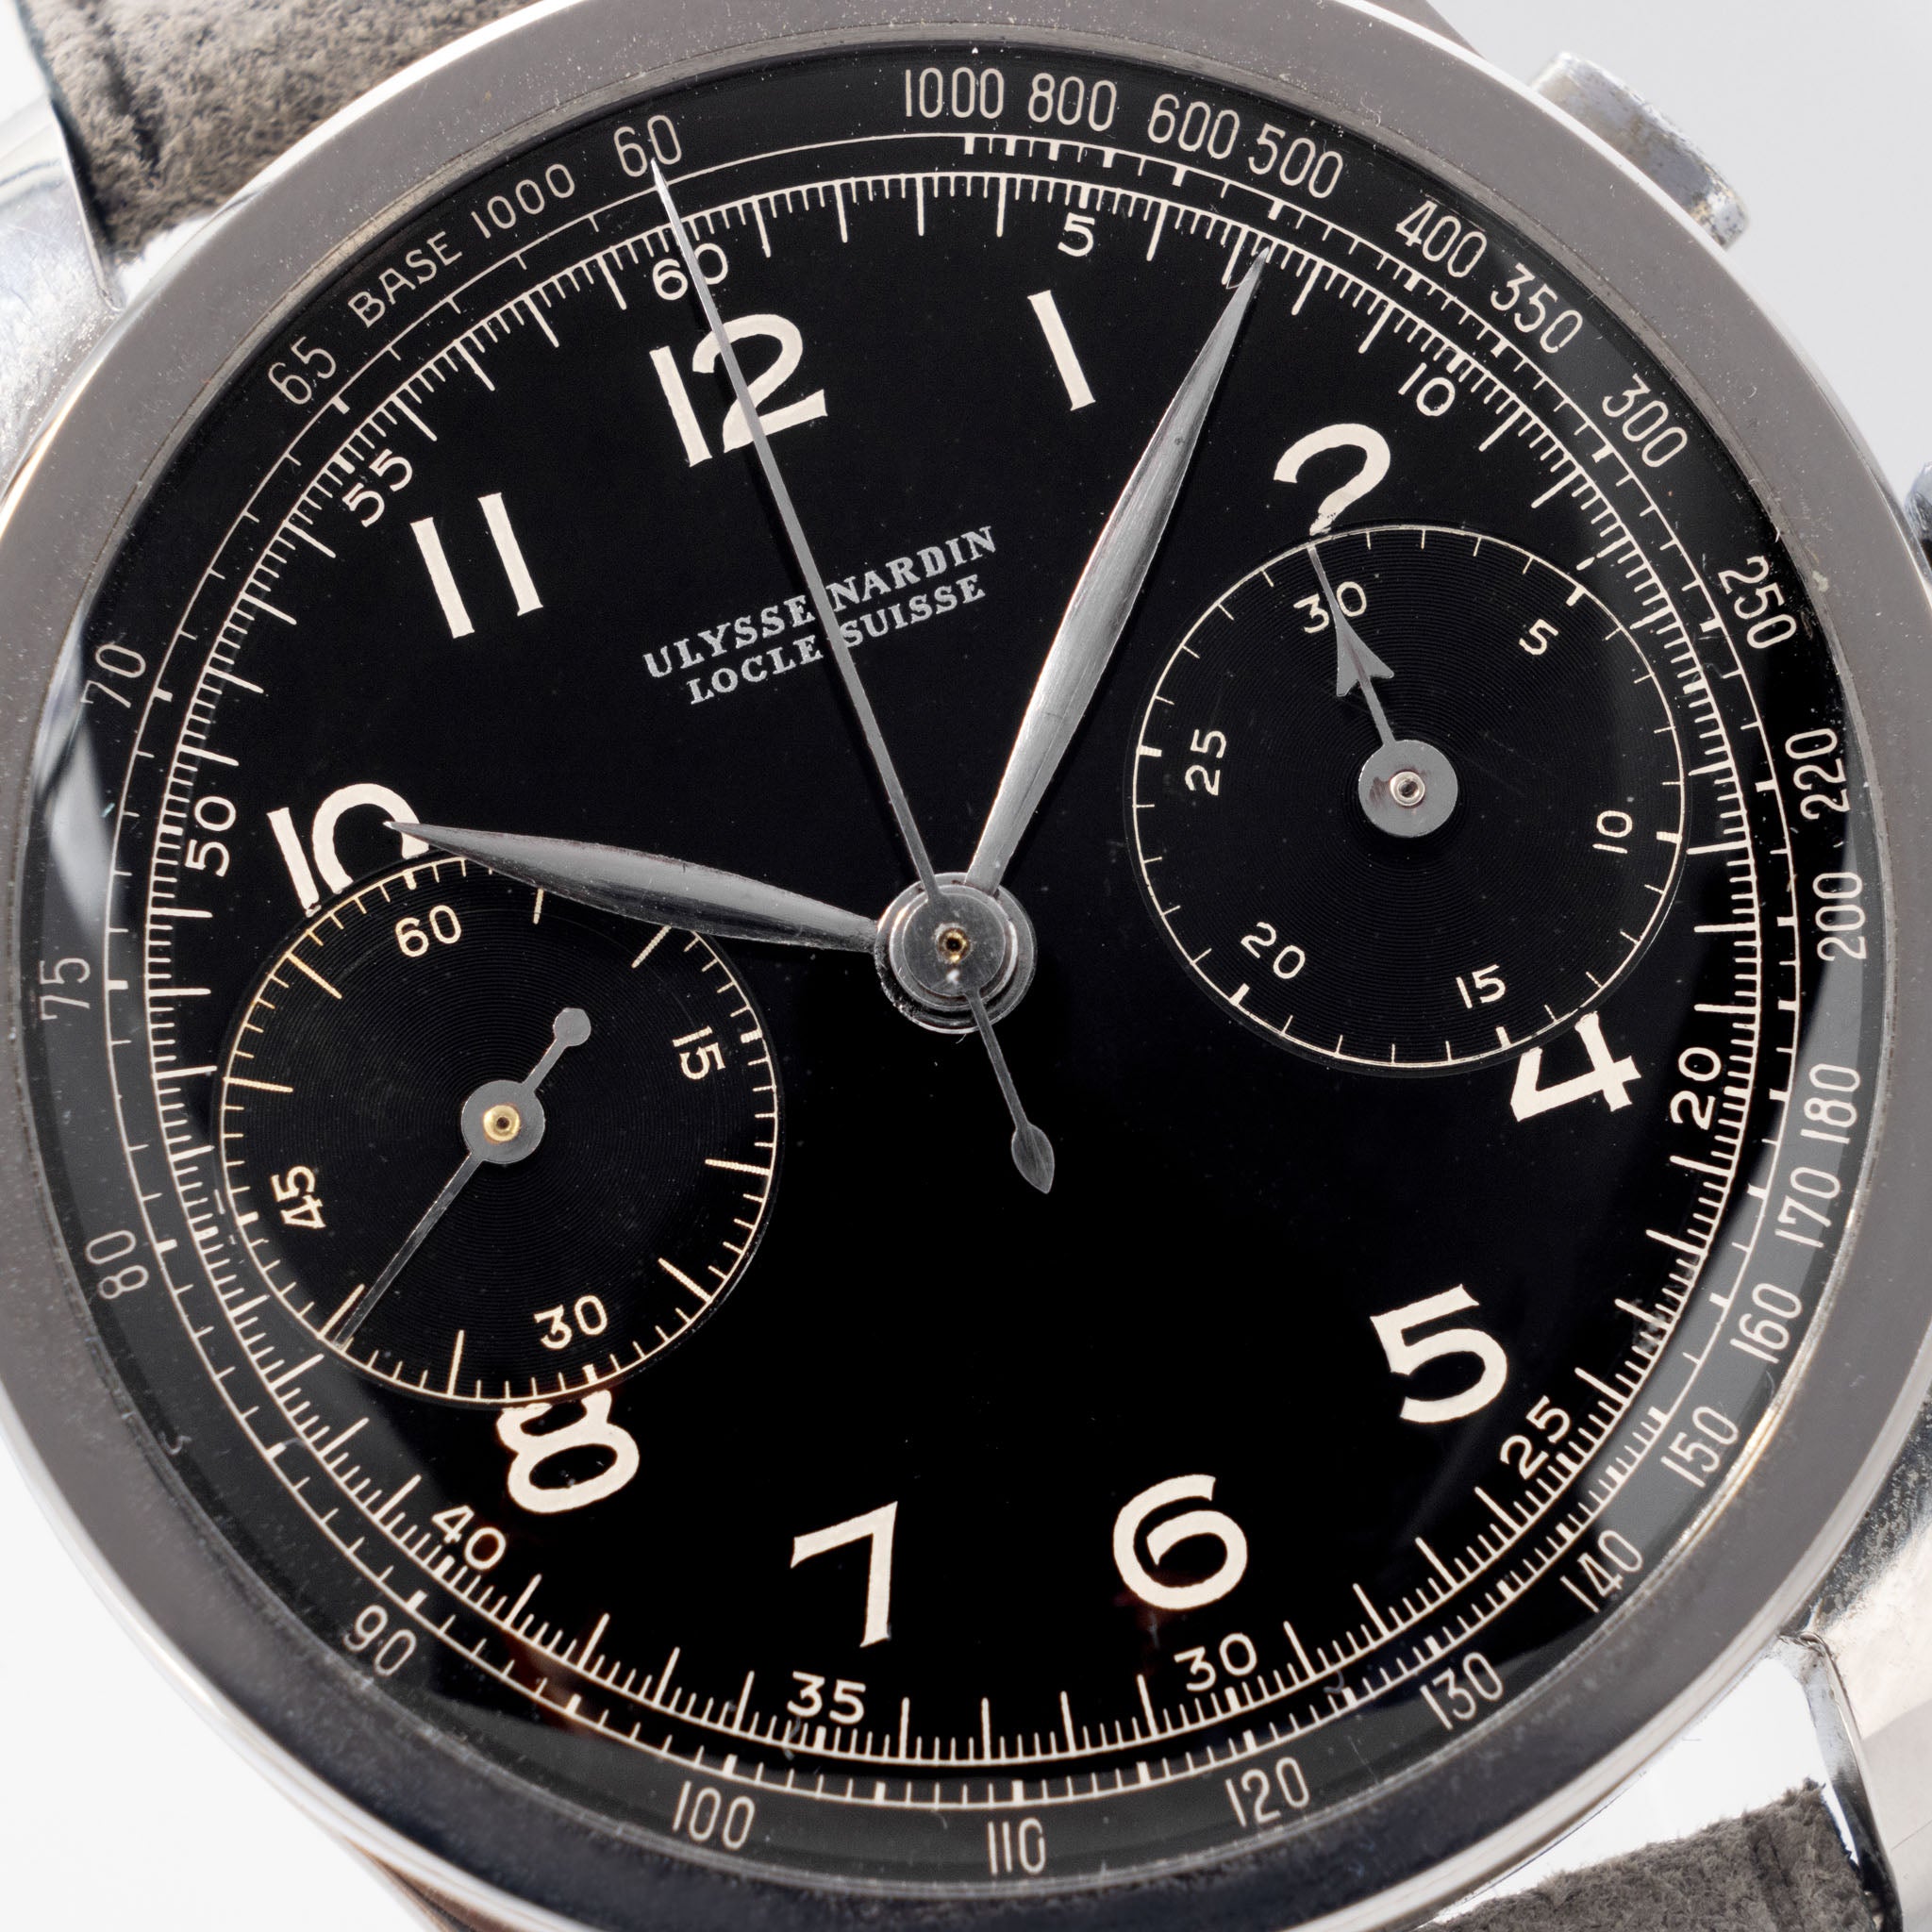 Ulysse Nardin Oversized Chronograph Galvanic Black Dial Valjoux 22